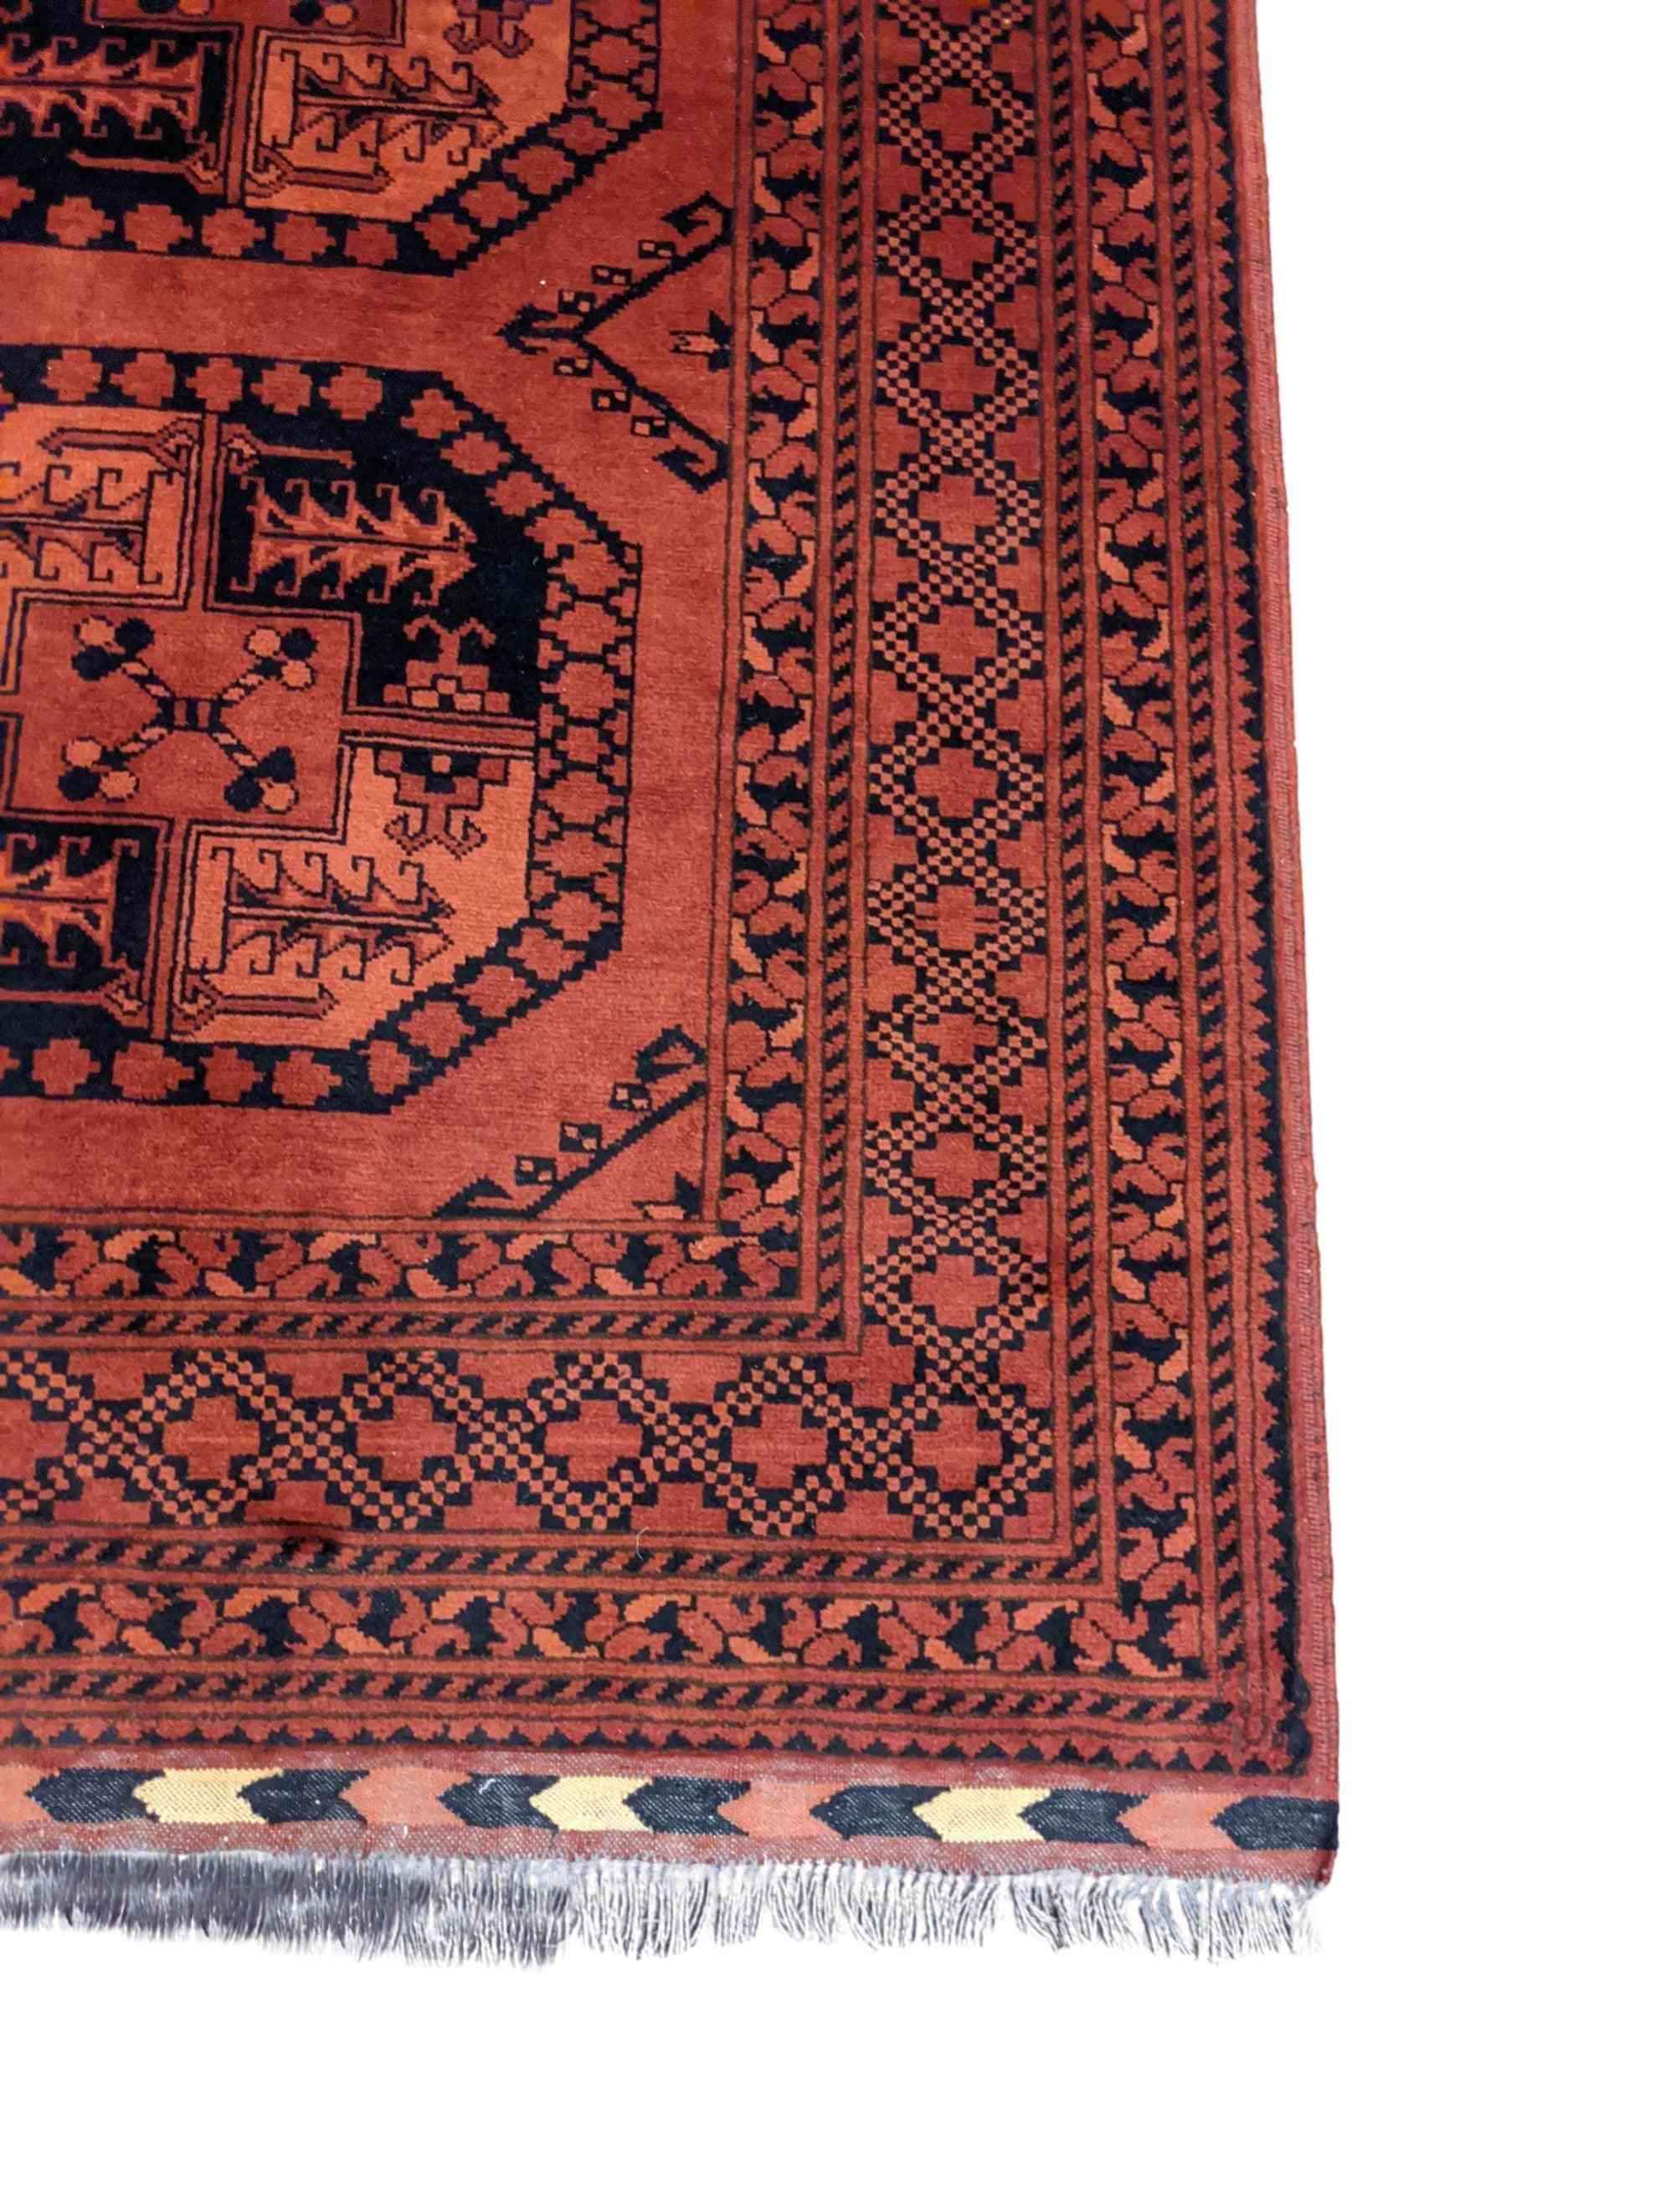 203 x 123 cm fine Afghan natural dye Tribal Red Rug - Rugmaster